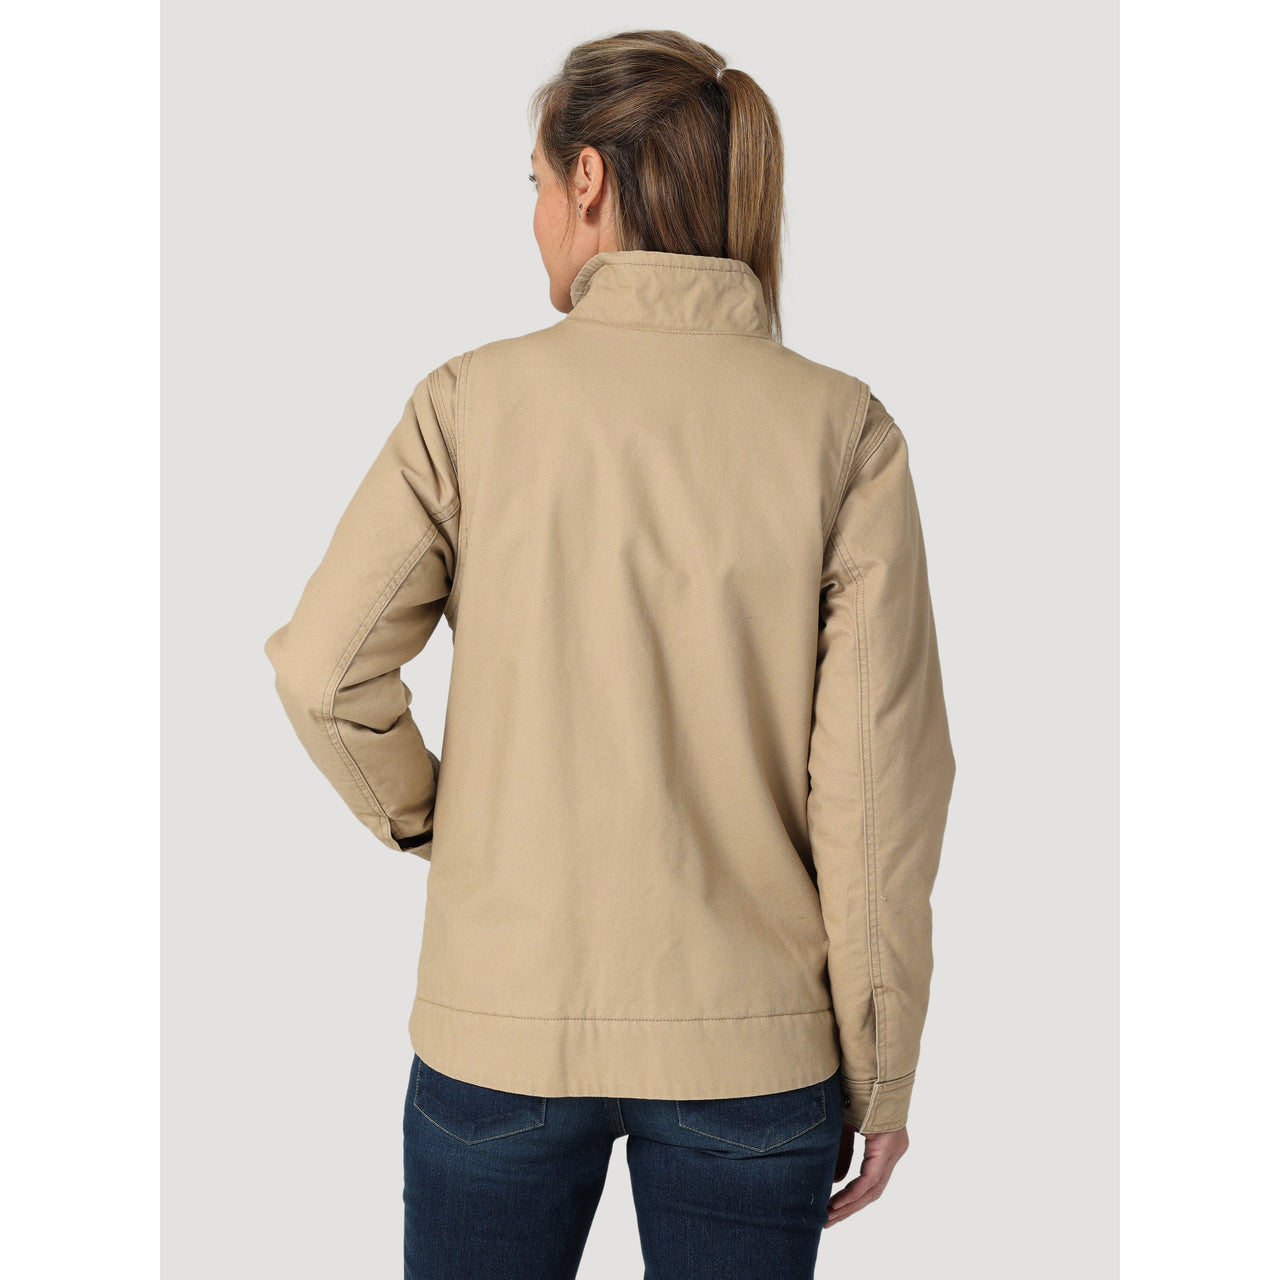 Wrangler Women's RIGGS Tough Layers Sherpa Lined Canvas Jacket - Golden Khaki